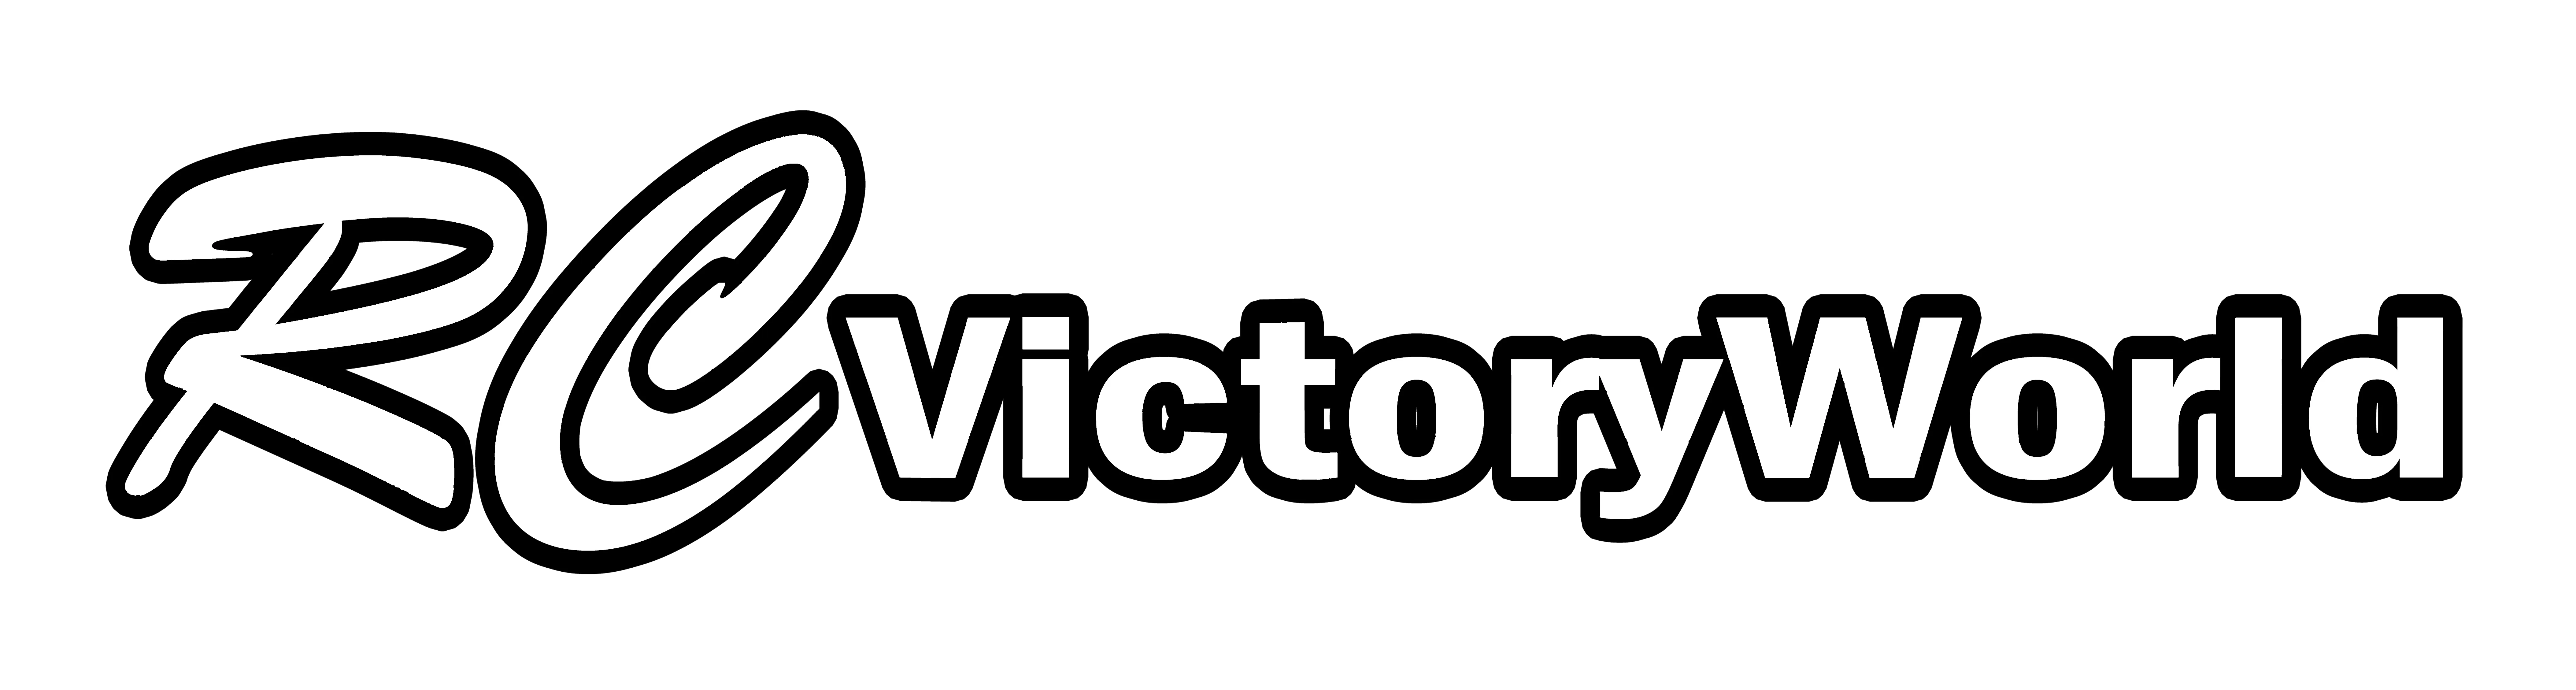 rc-victory-world-logo